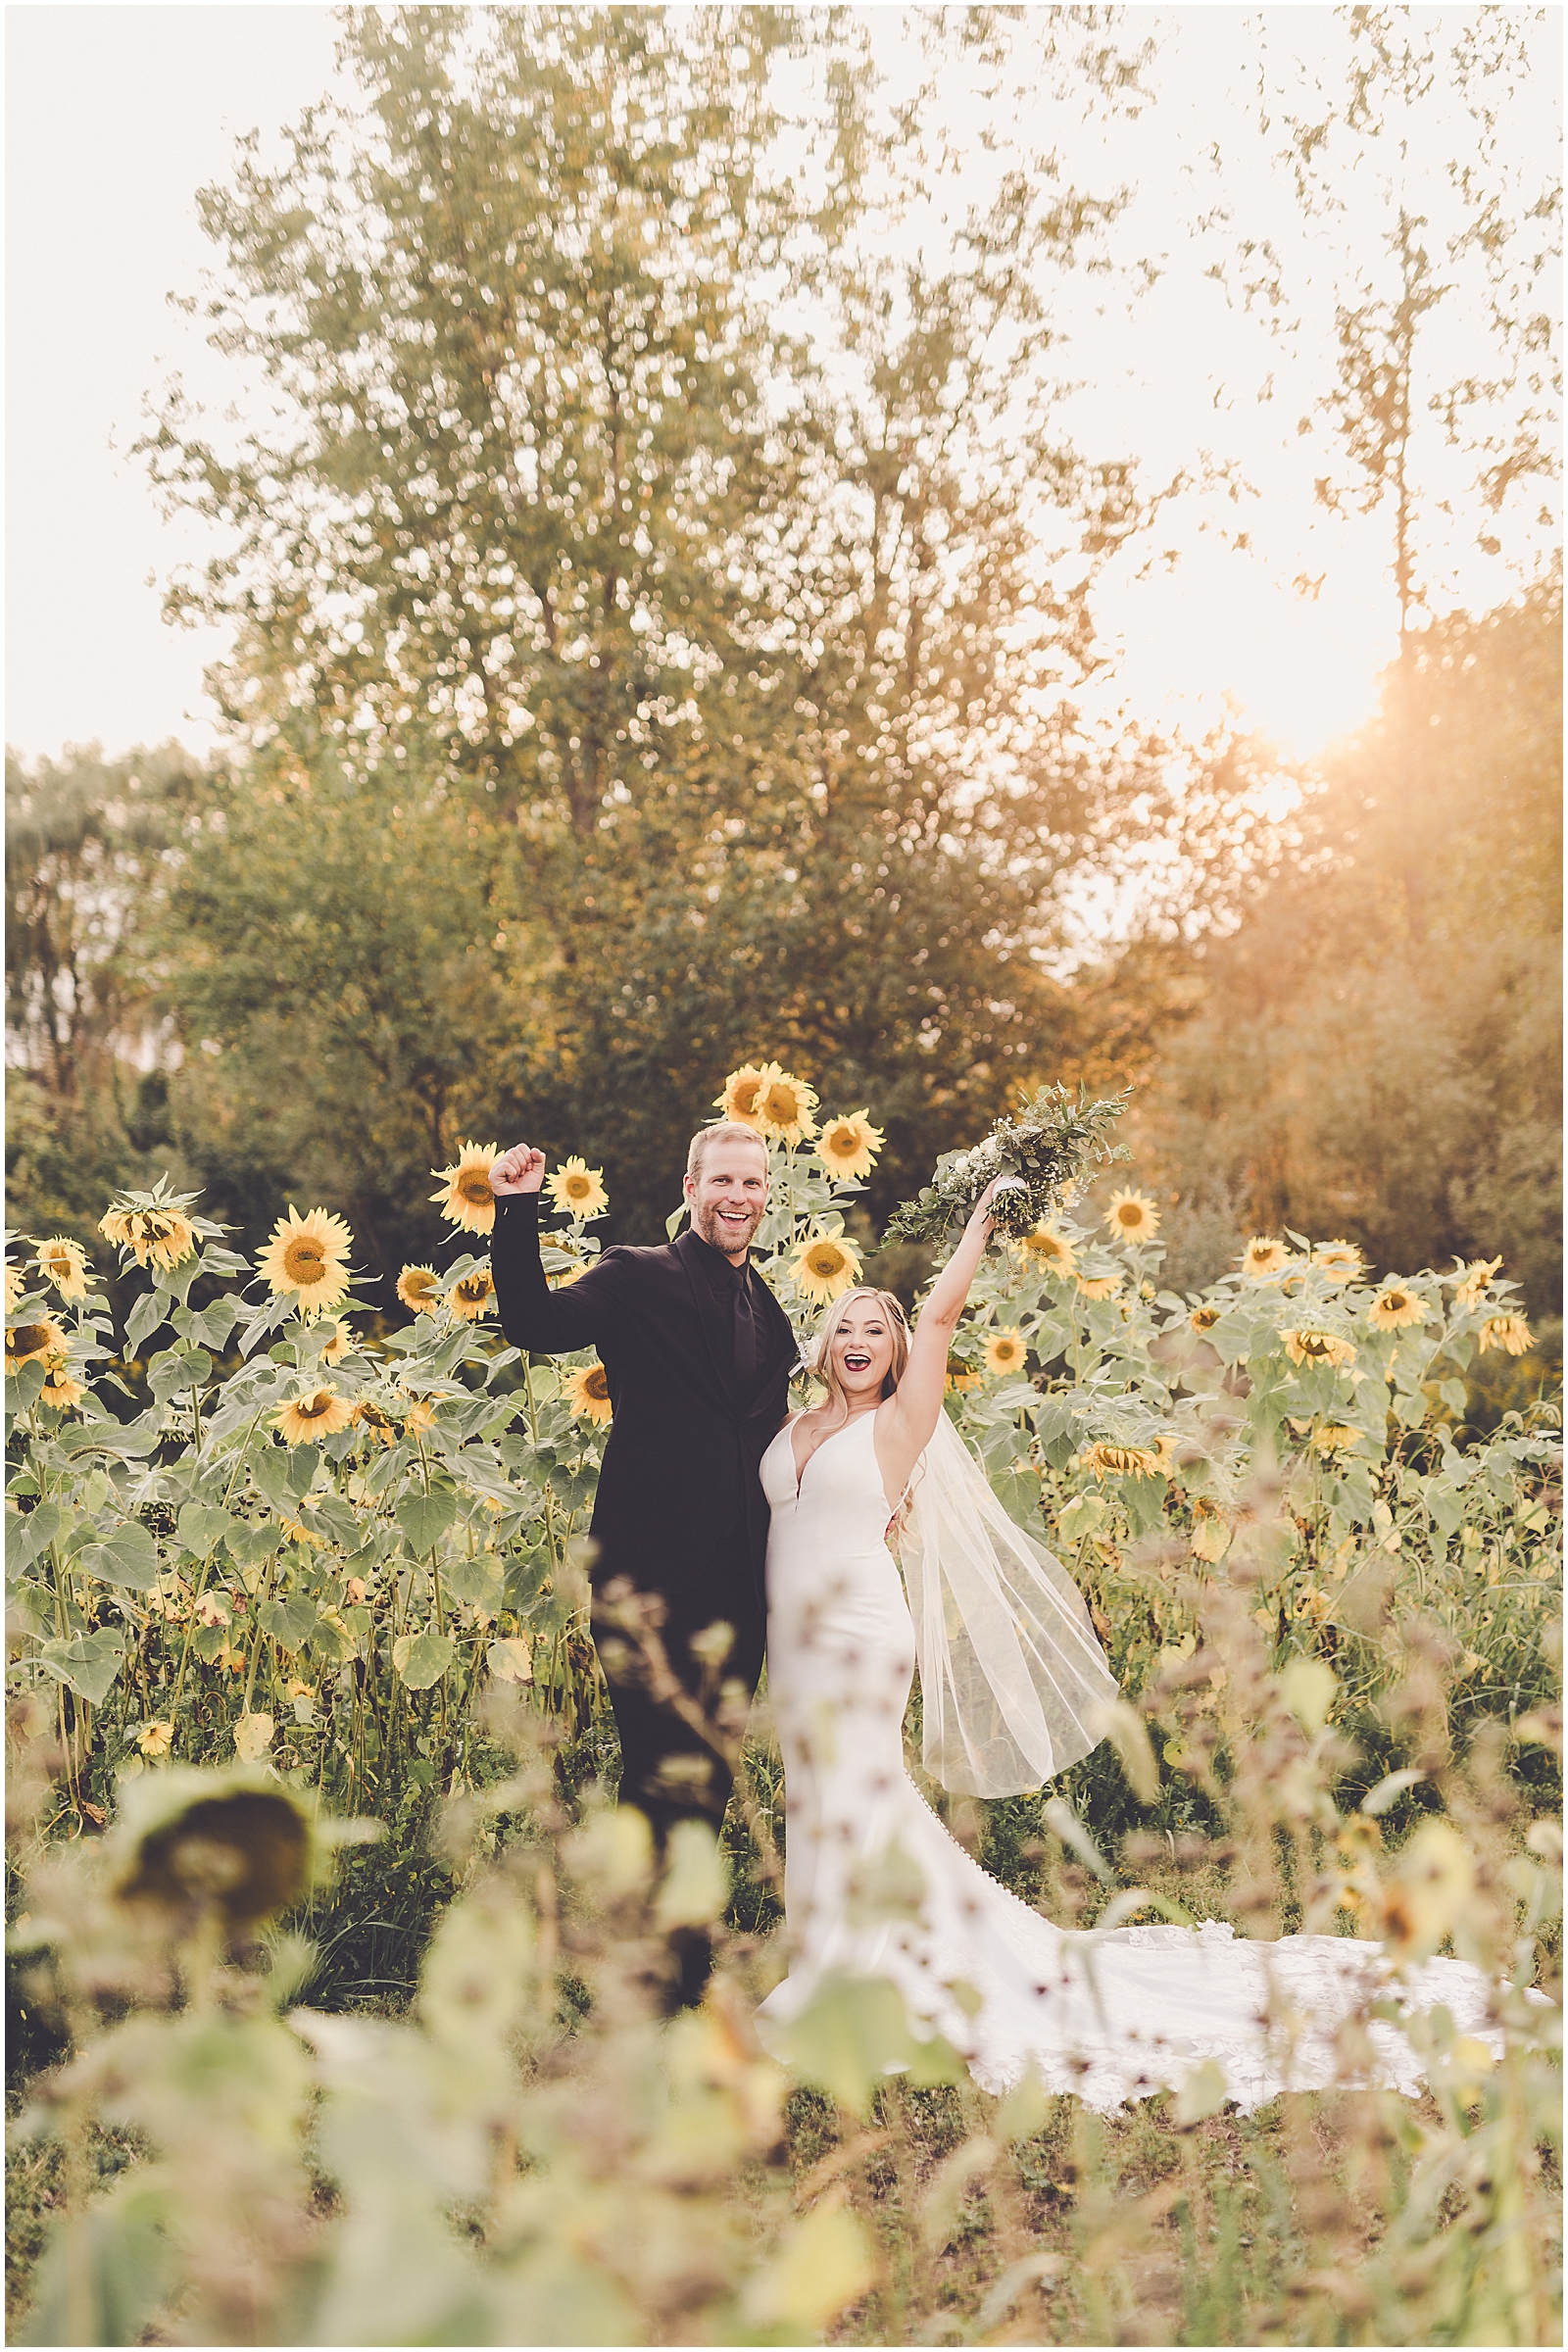 Bre and Sean's September outdoor wedding in Valparaiso, Indiana with Chicagoland wedding photographer Kara Evans Photographer.